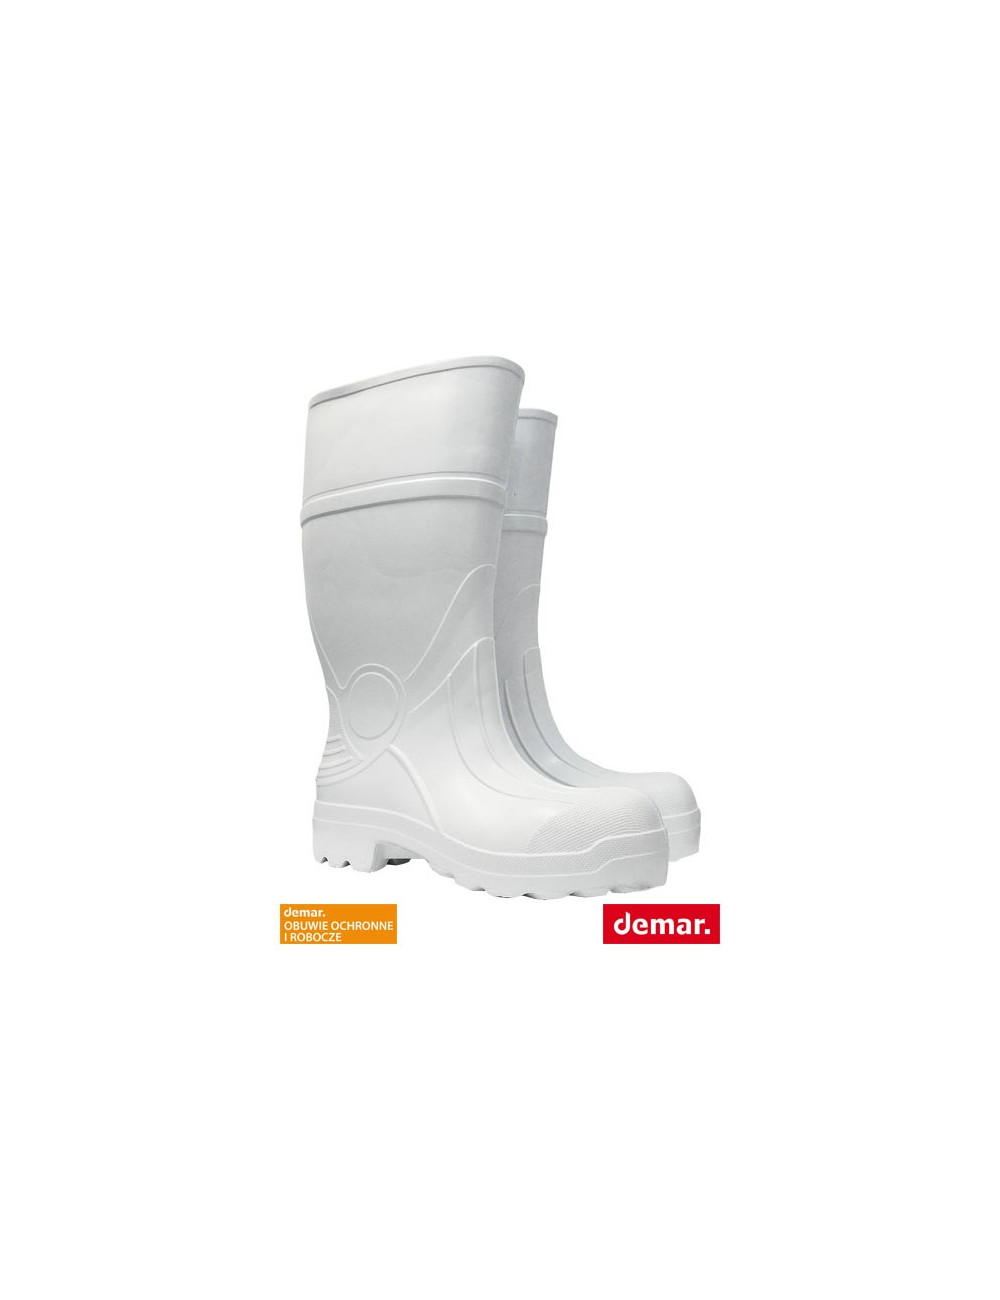 Bdpredator professional boots in white Demar